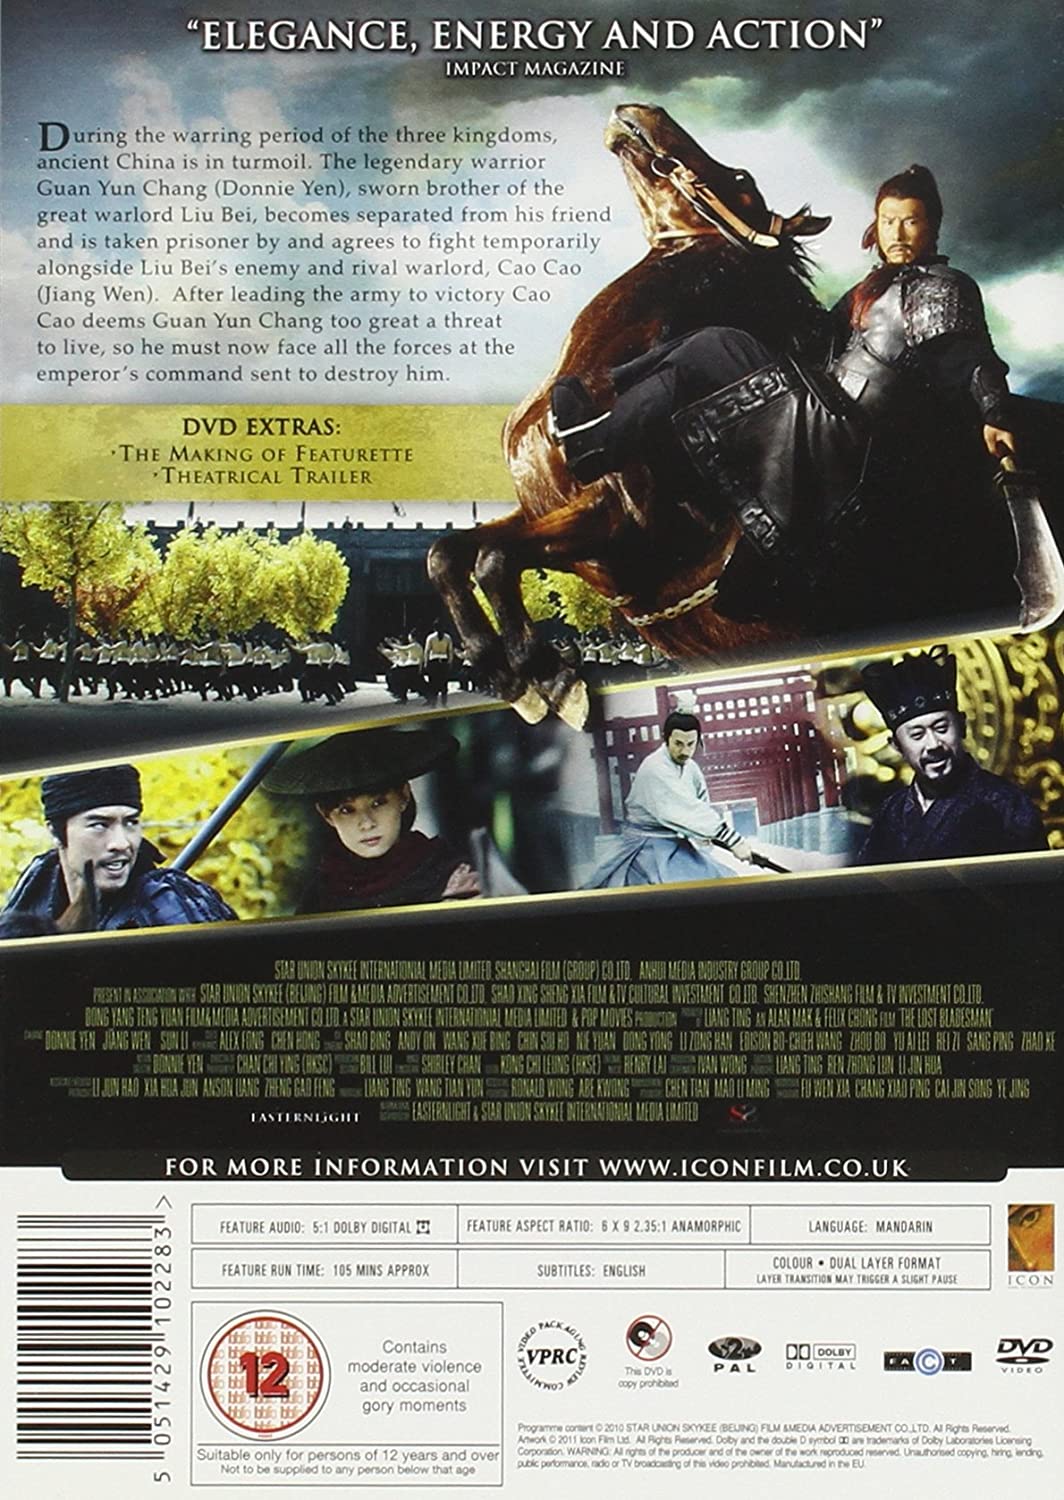 The Lost Bladesman - Action/Drama [DVD]